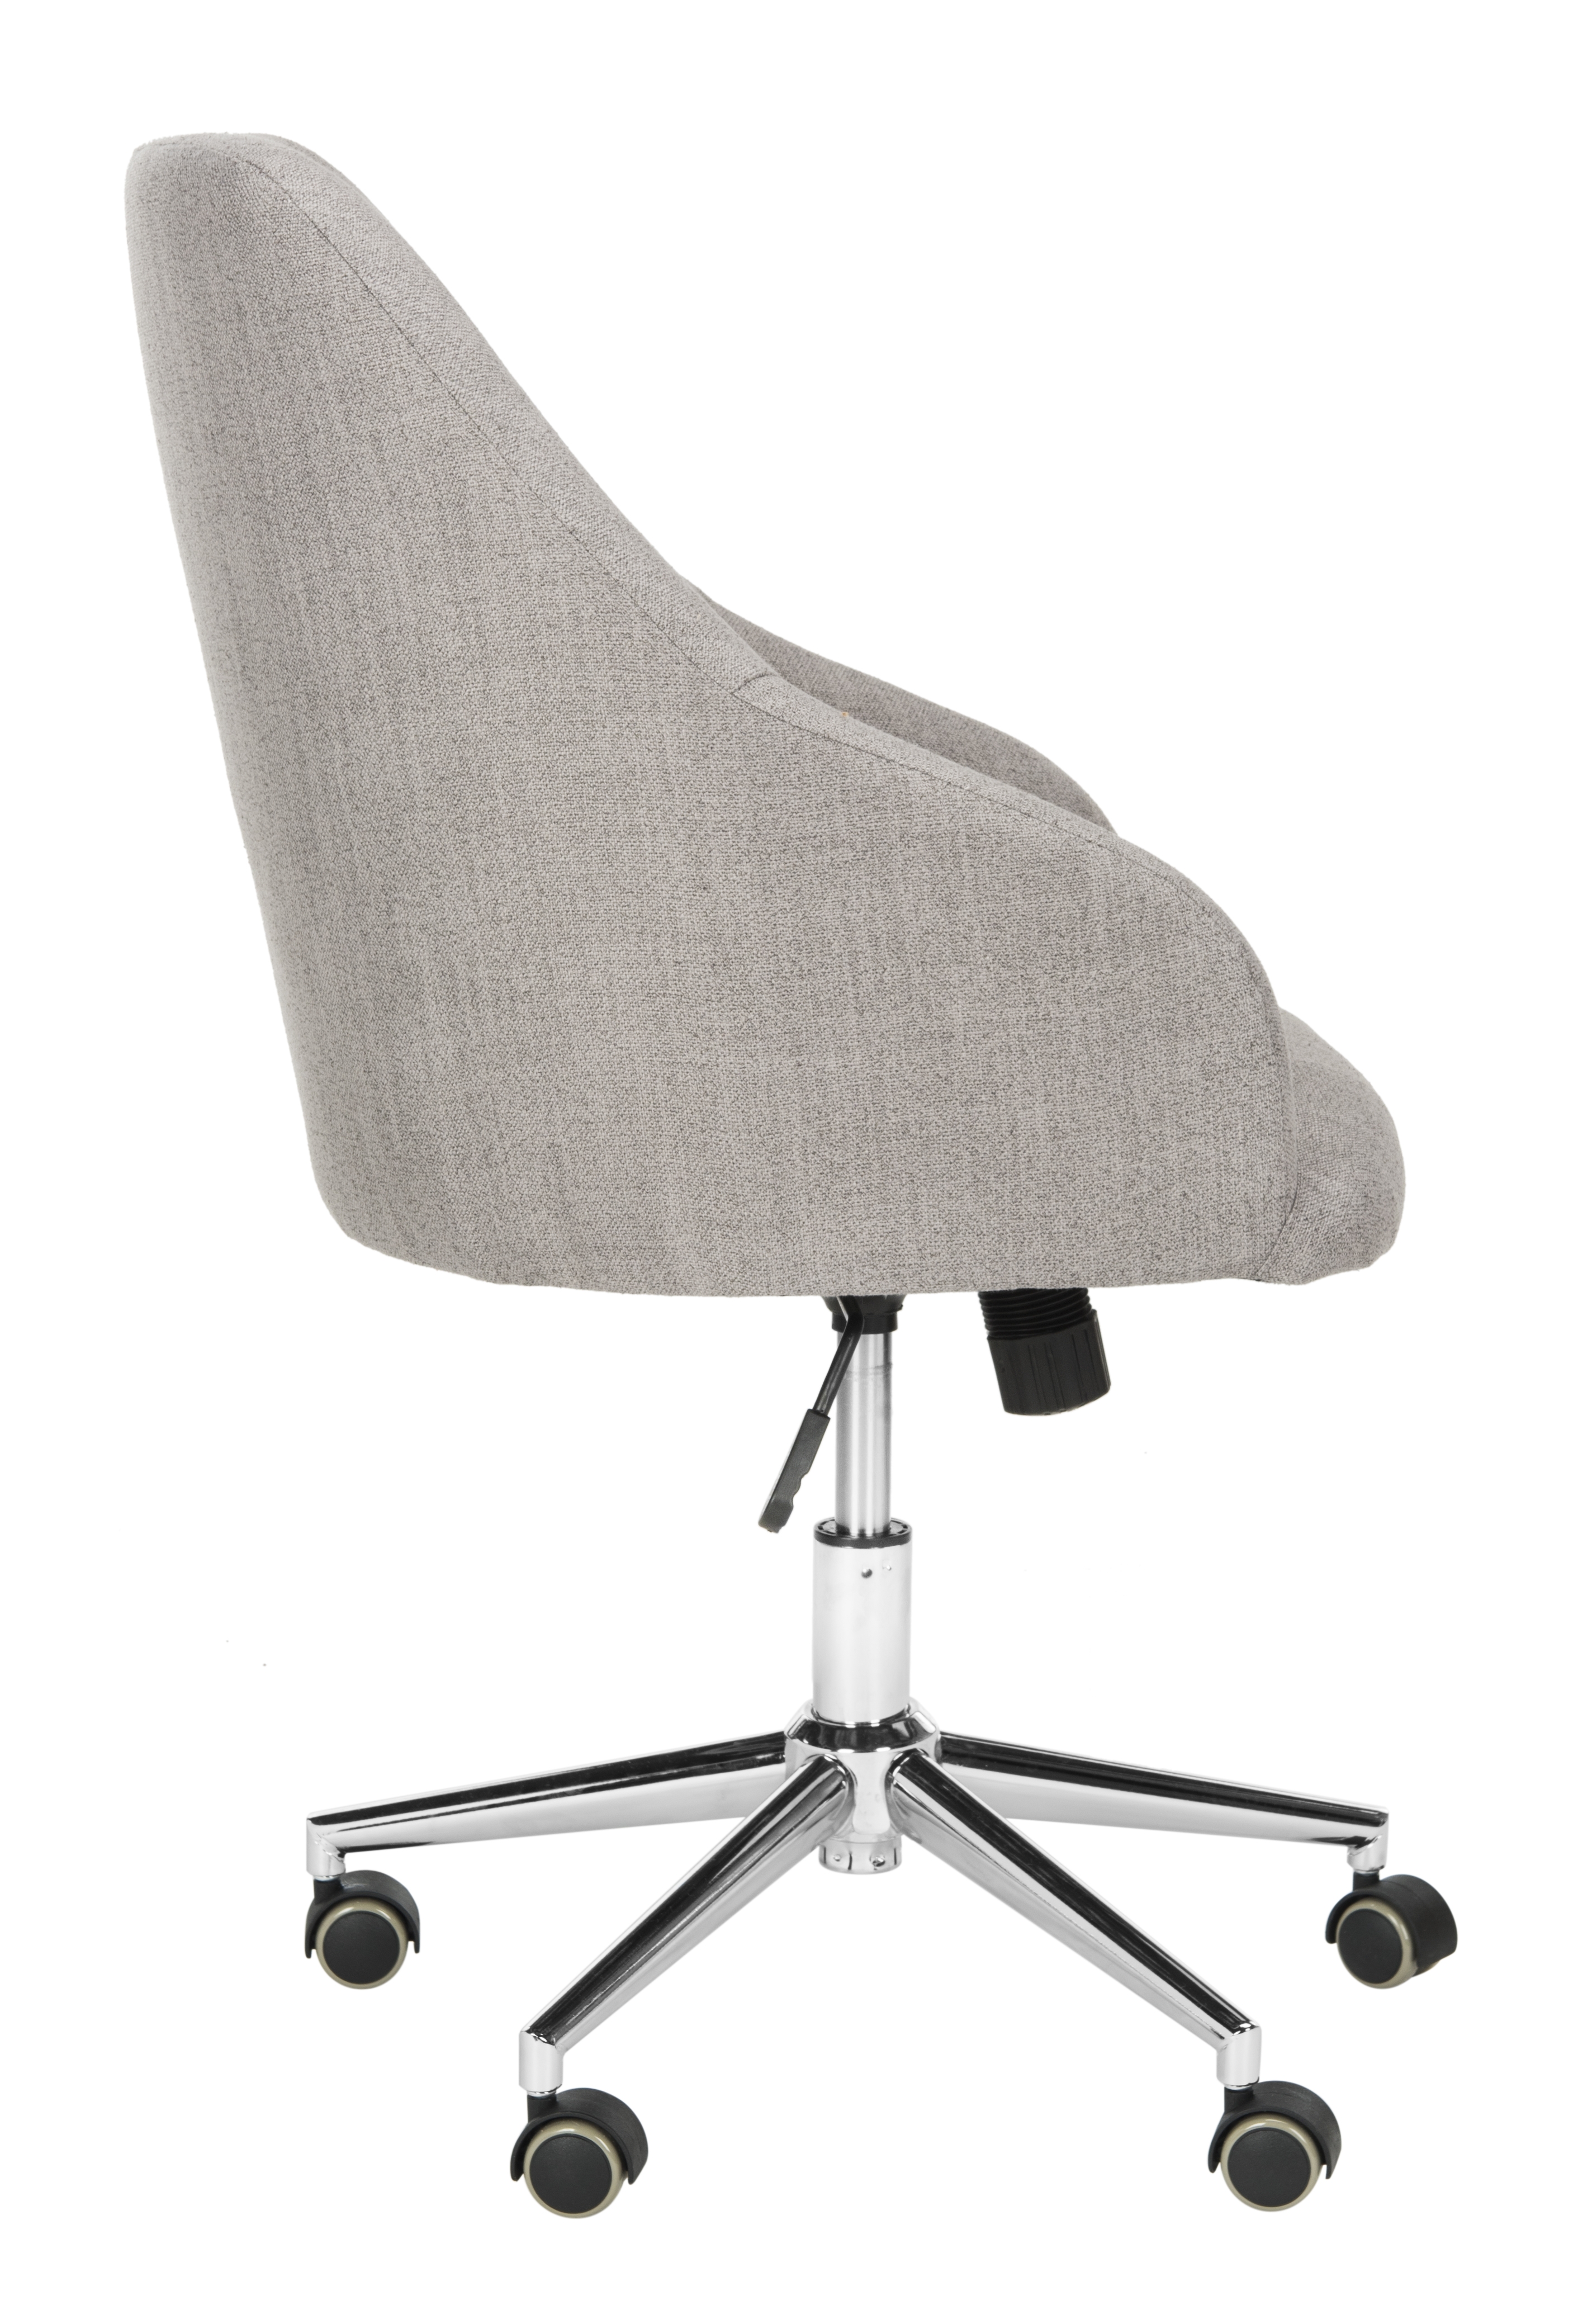 Adrienne Linen Chrome Leg Swivel Office Chair - Grey/Chrome - Safavieh - Image 1